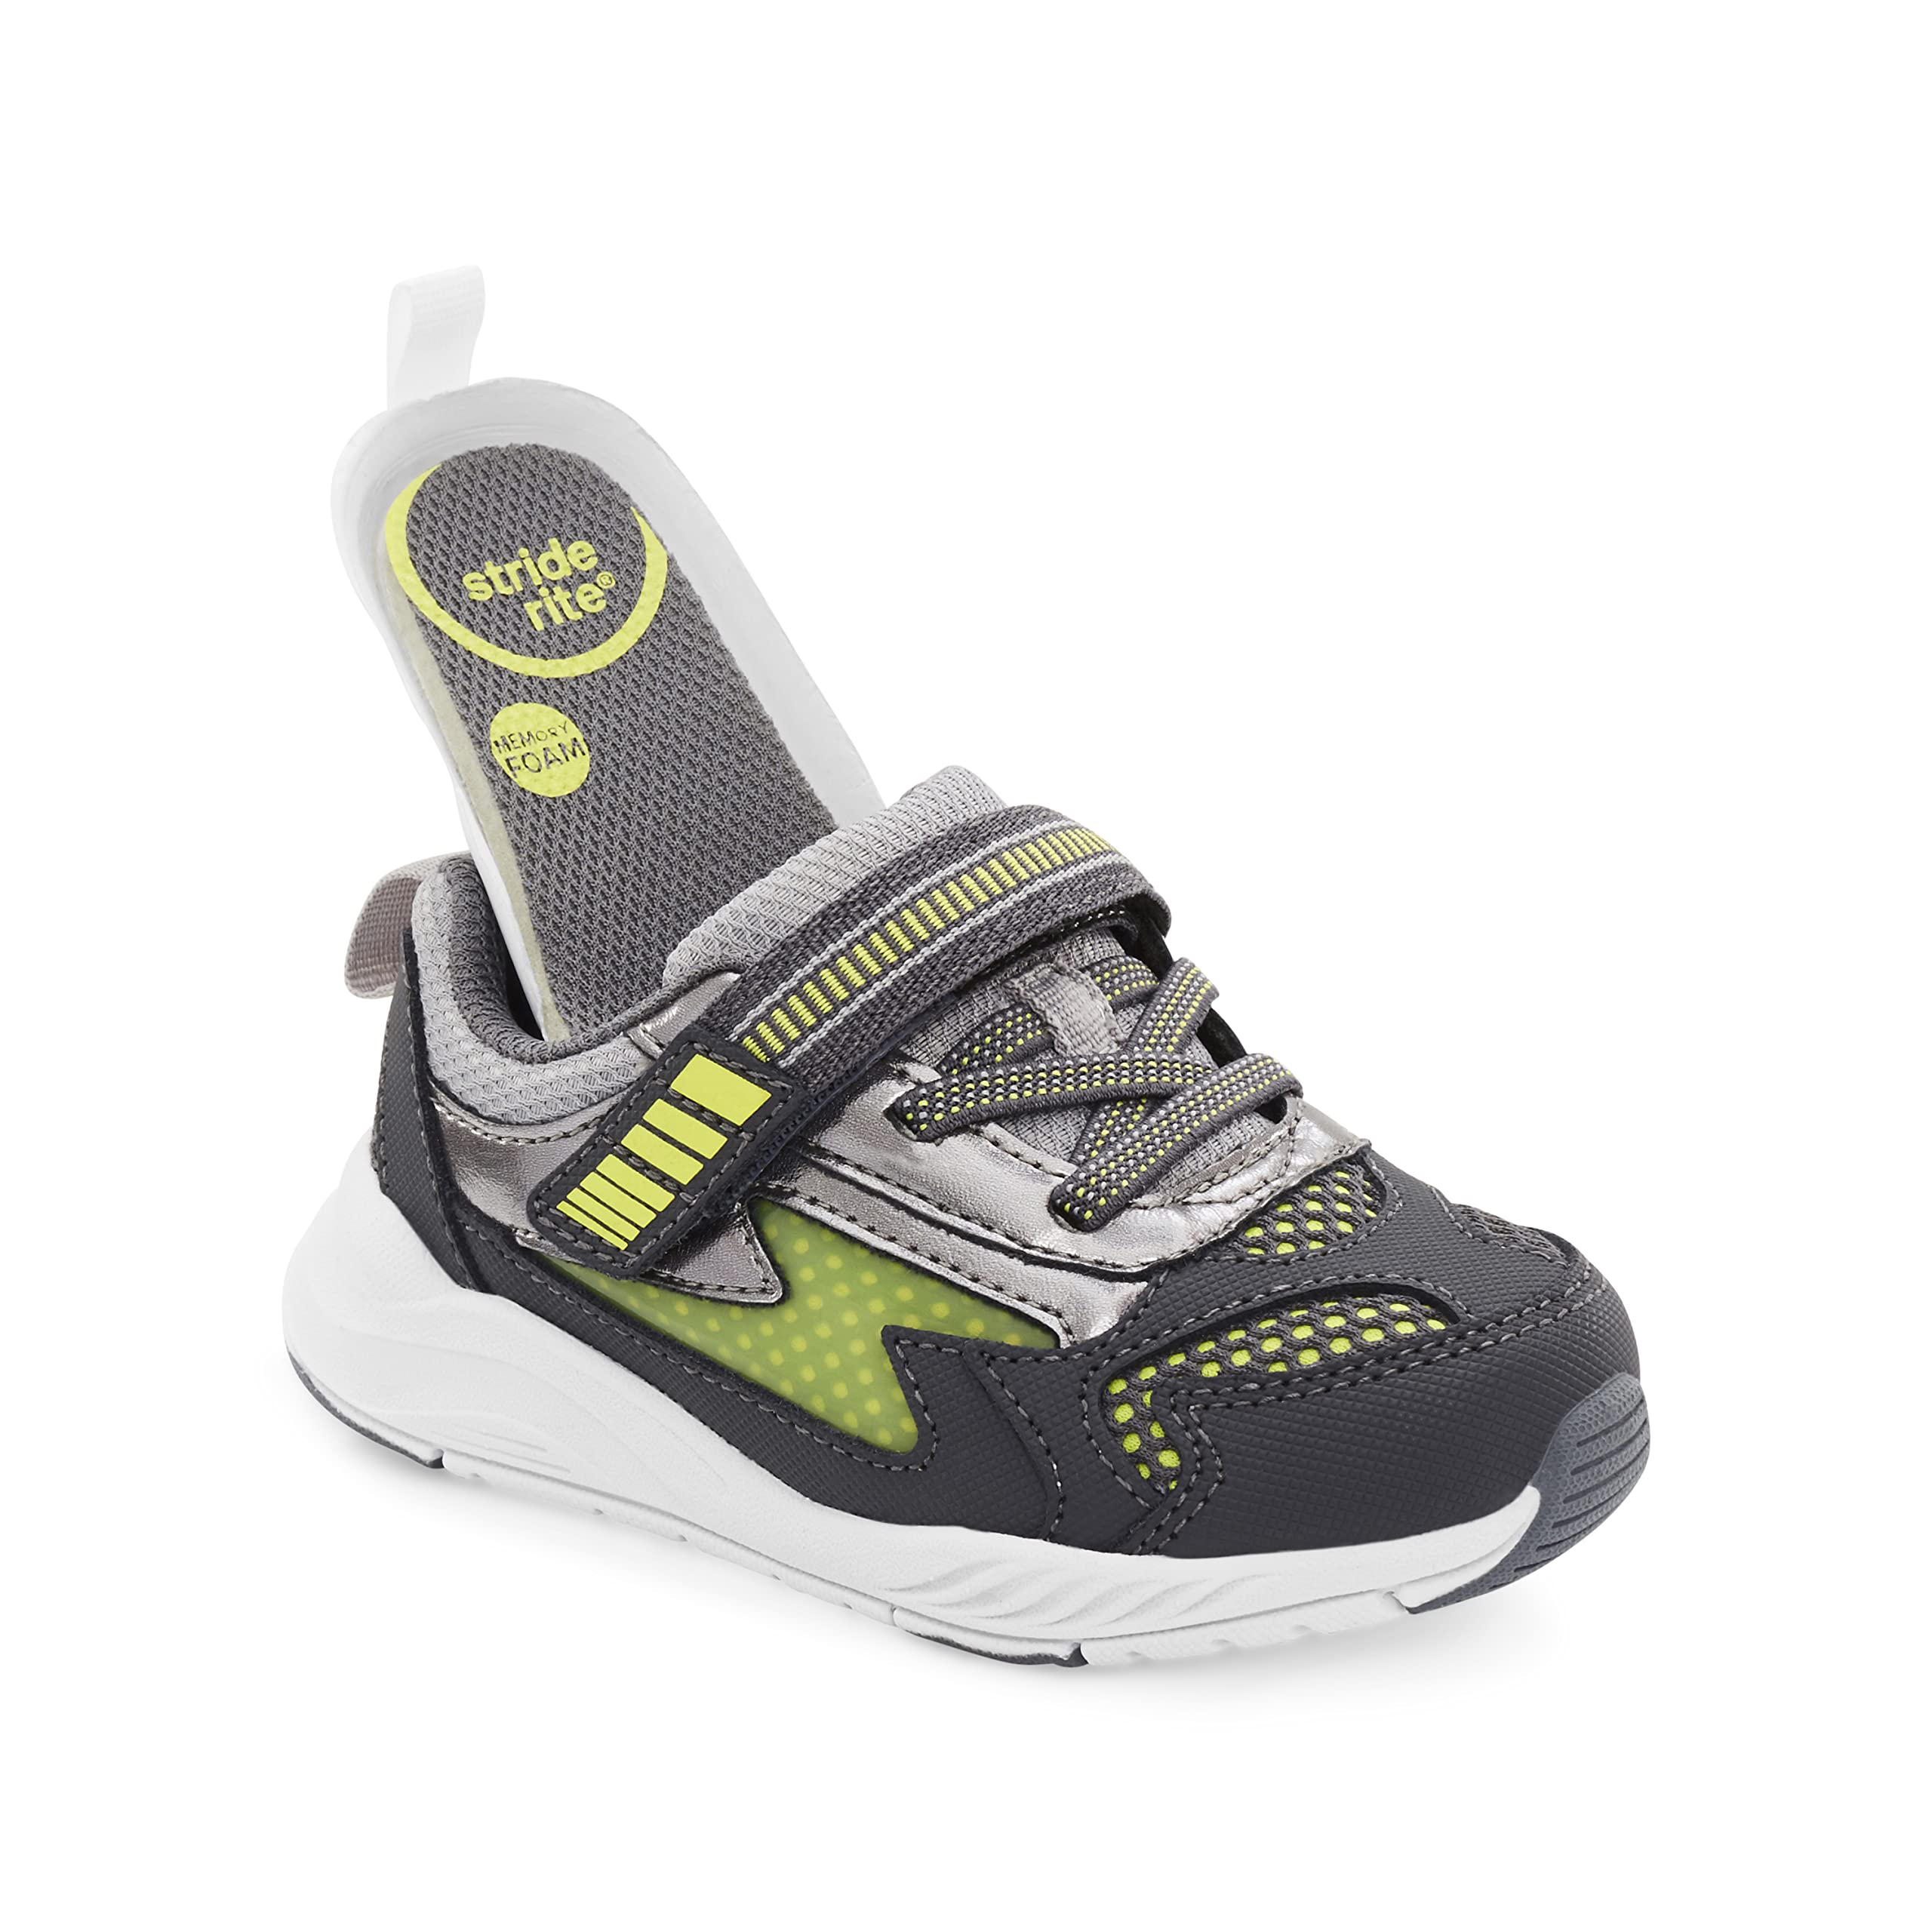 Stride Rite Unisex-Child Lighted Cosmic-Adapt Sneaker